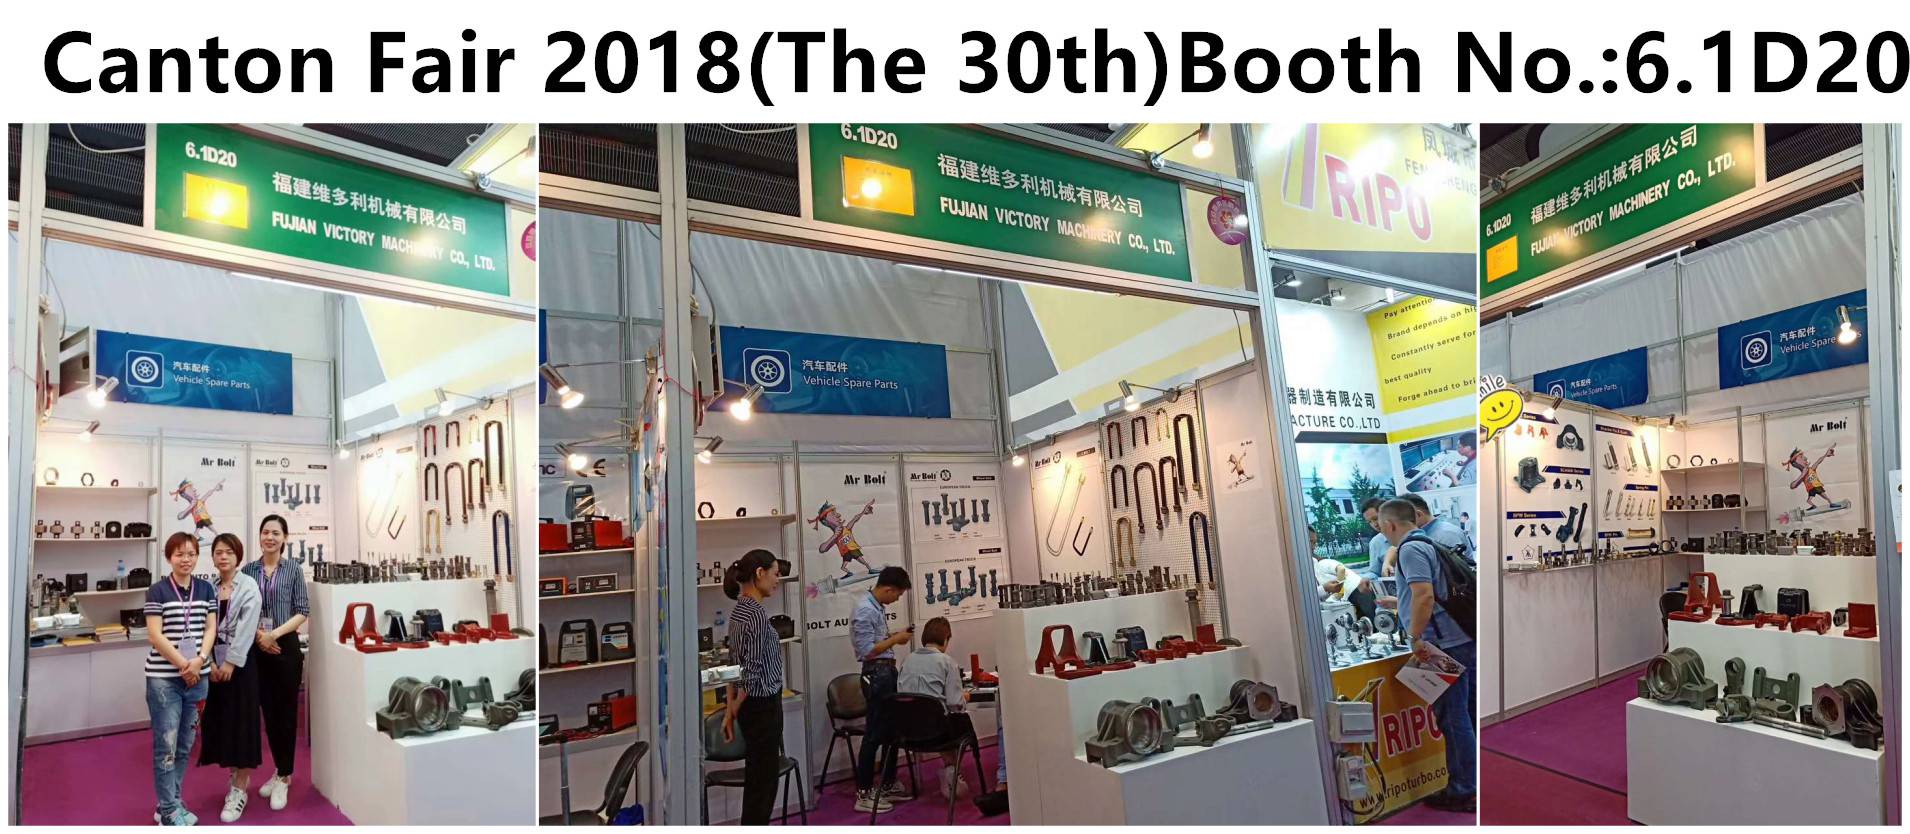 Canton Fair 2018(The 30th)Booth No.:6.1D20